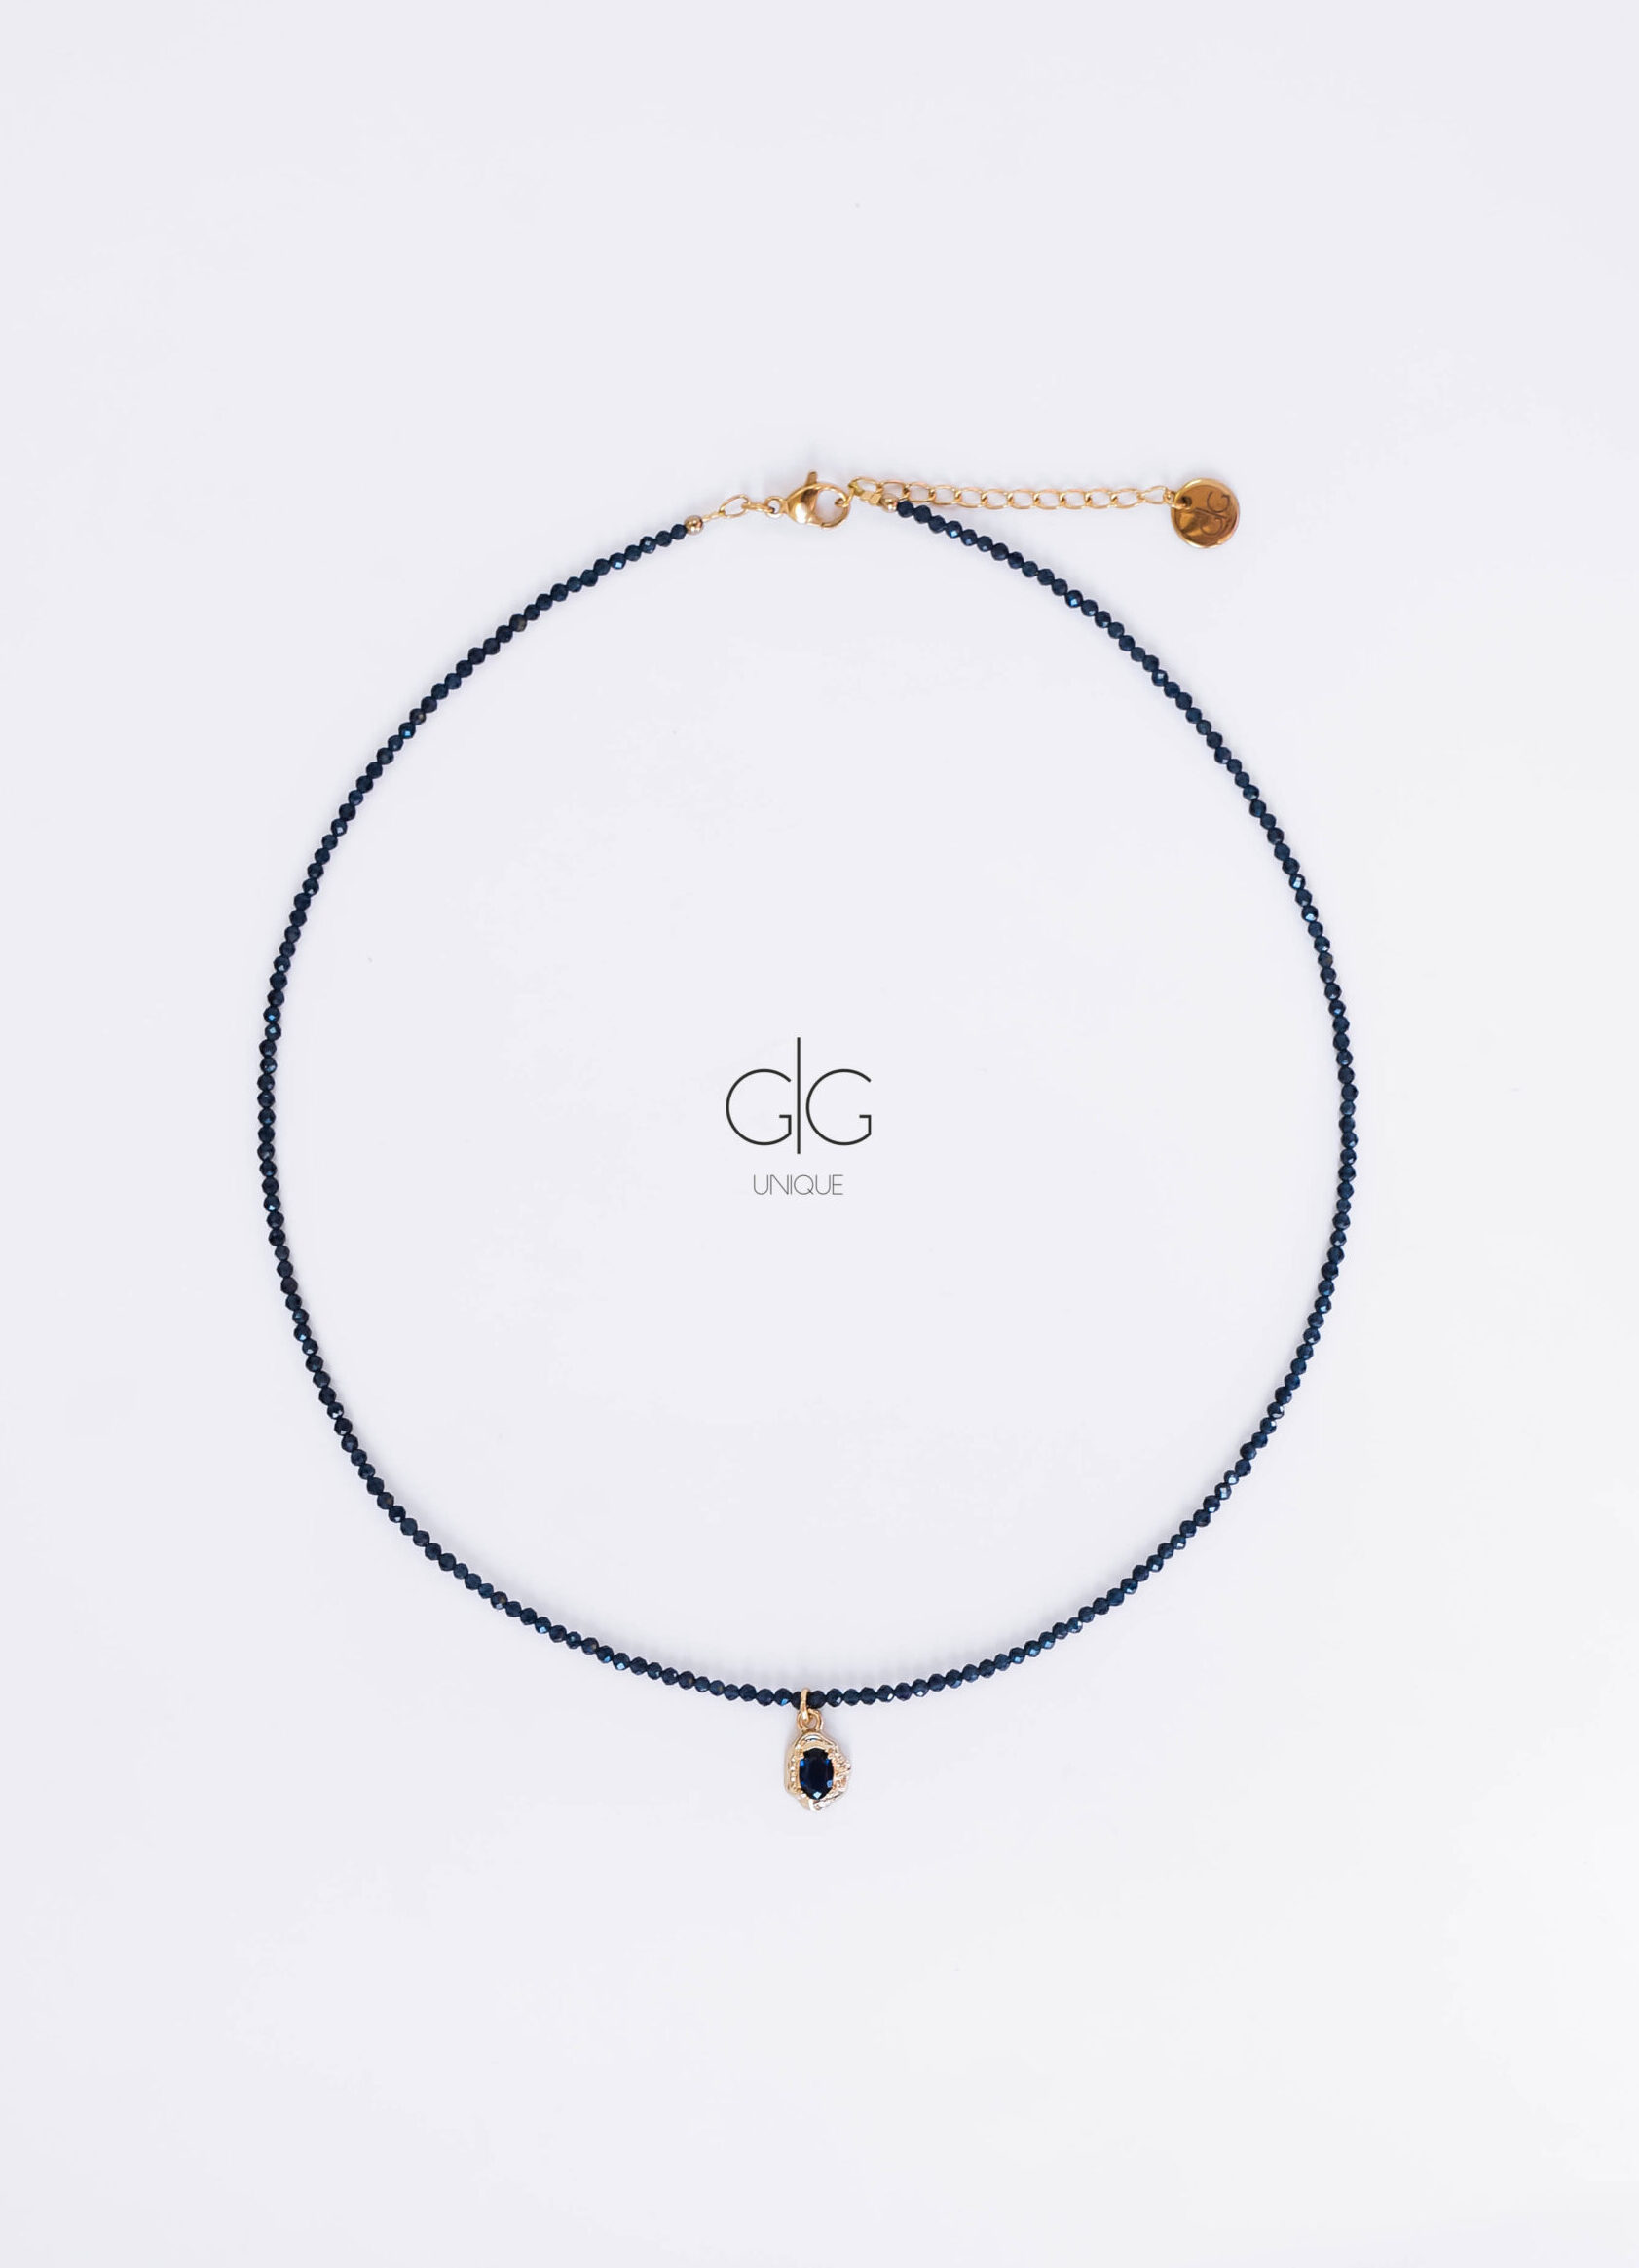 Dark blue zircon stone necklace - GG UNIQUE